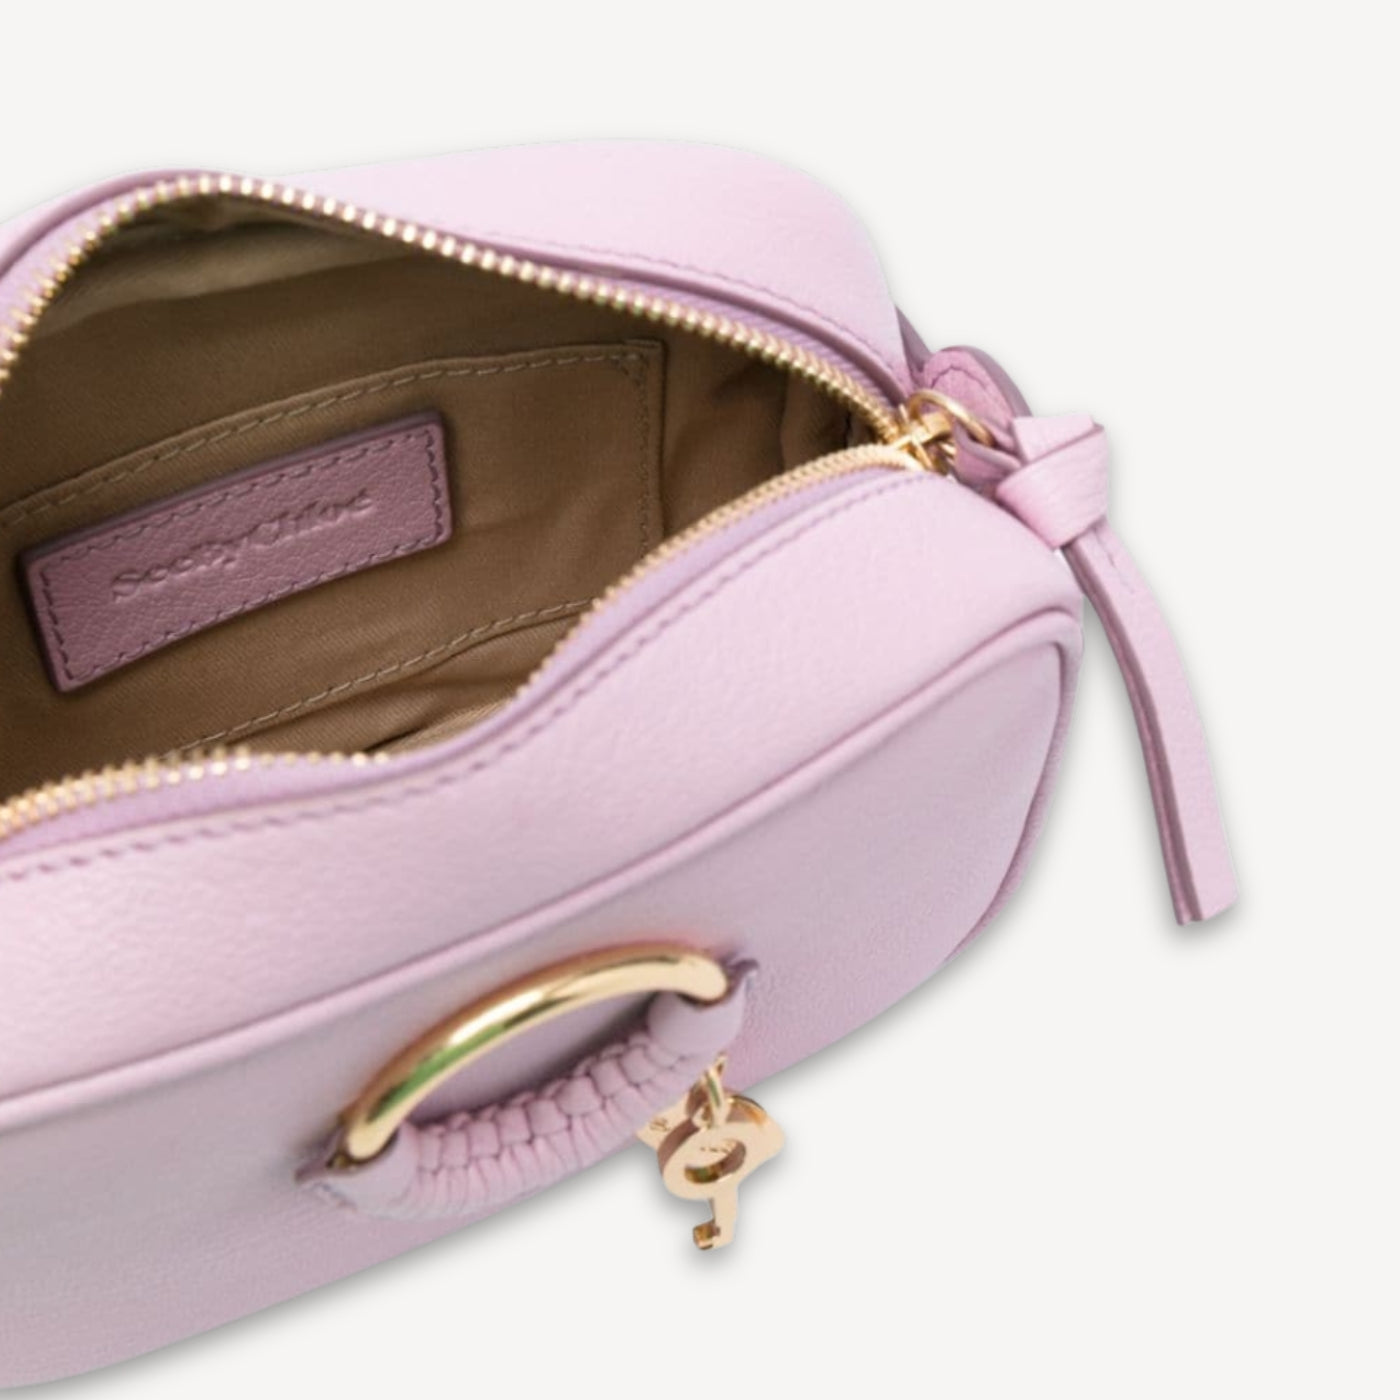 Hana Camera Case in Lavender Mist Handbags SEE BY CHLOE - LOLAMIR